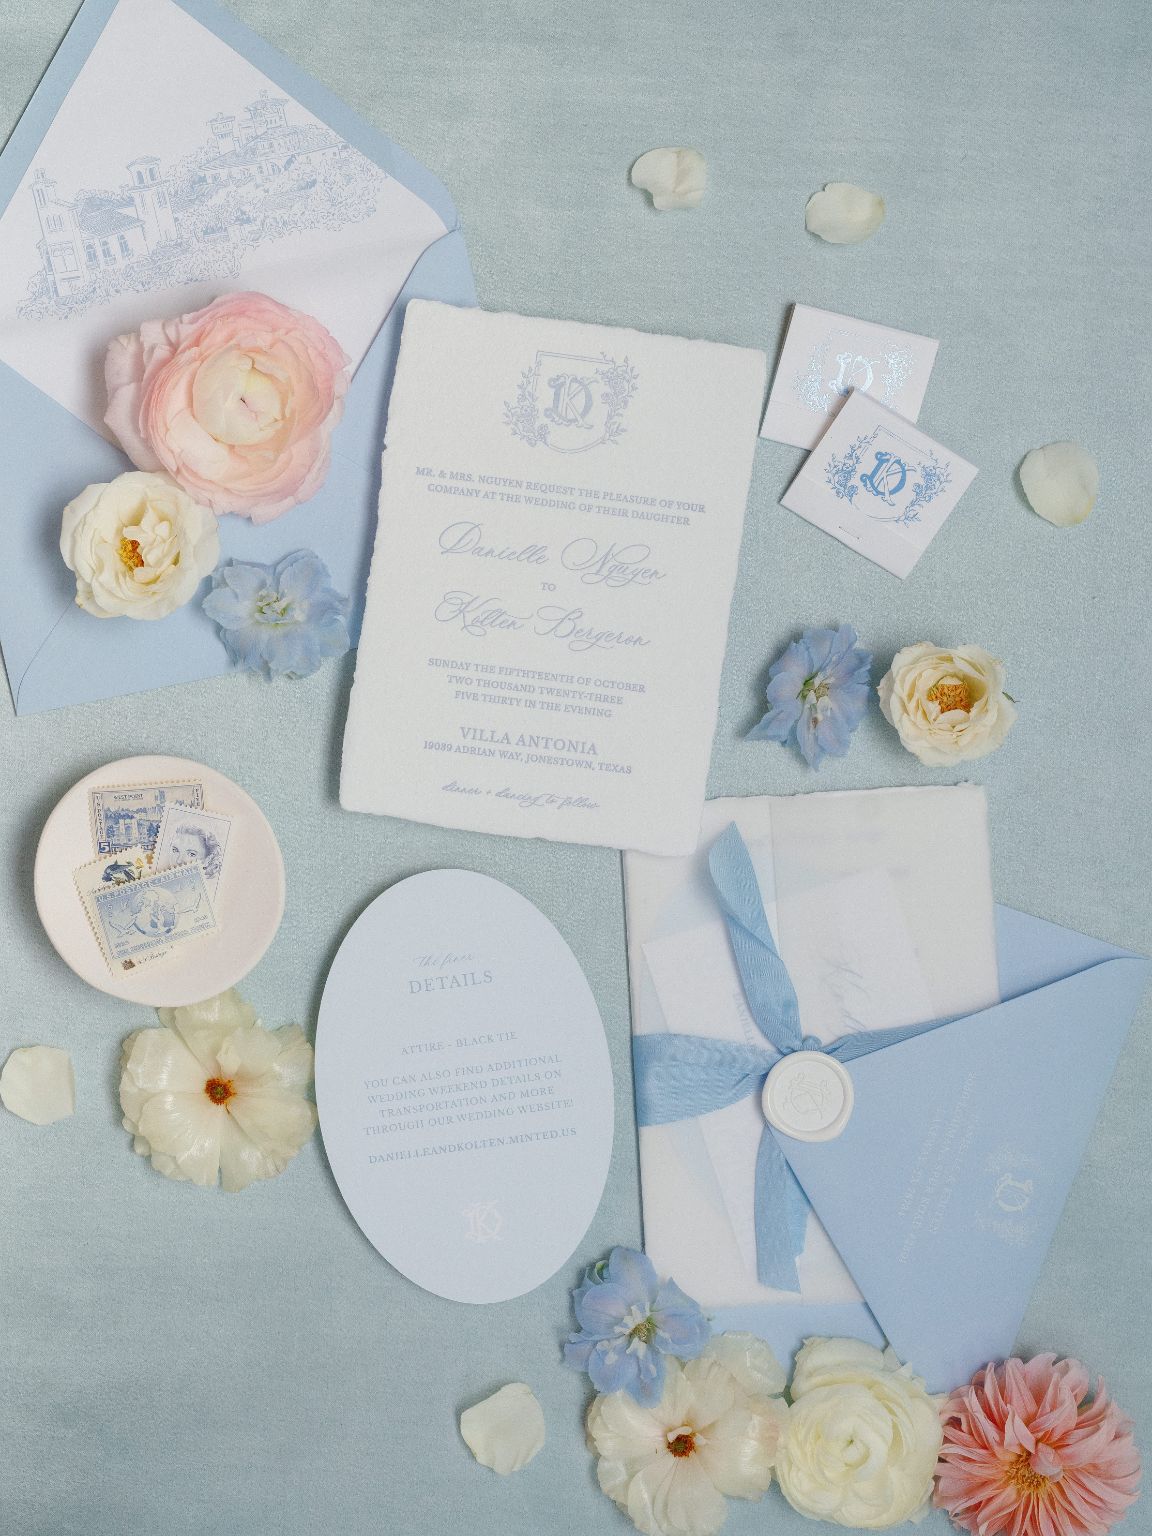 Villa Antonia Wedding details invite and florals
